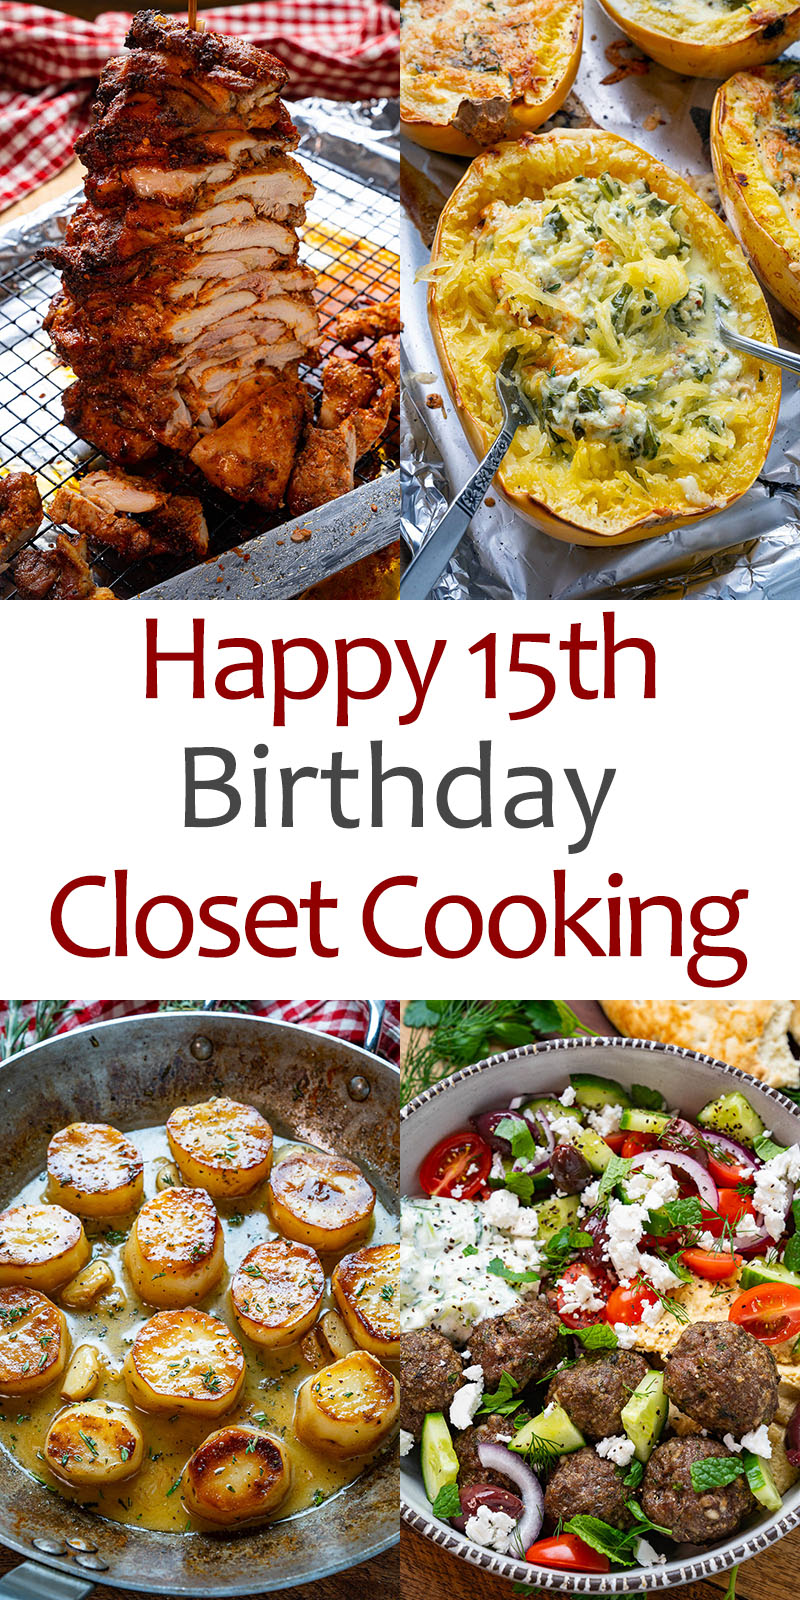 Happy 15th Birthday Closet Cooking!